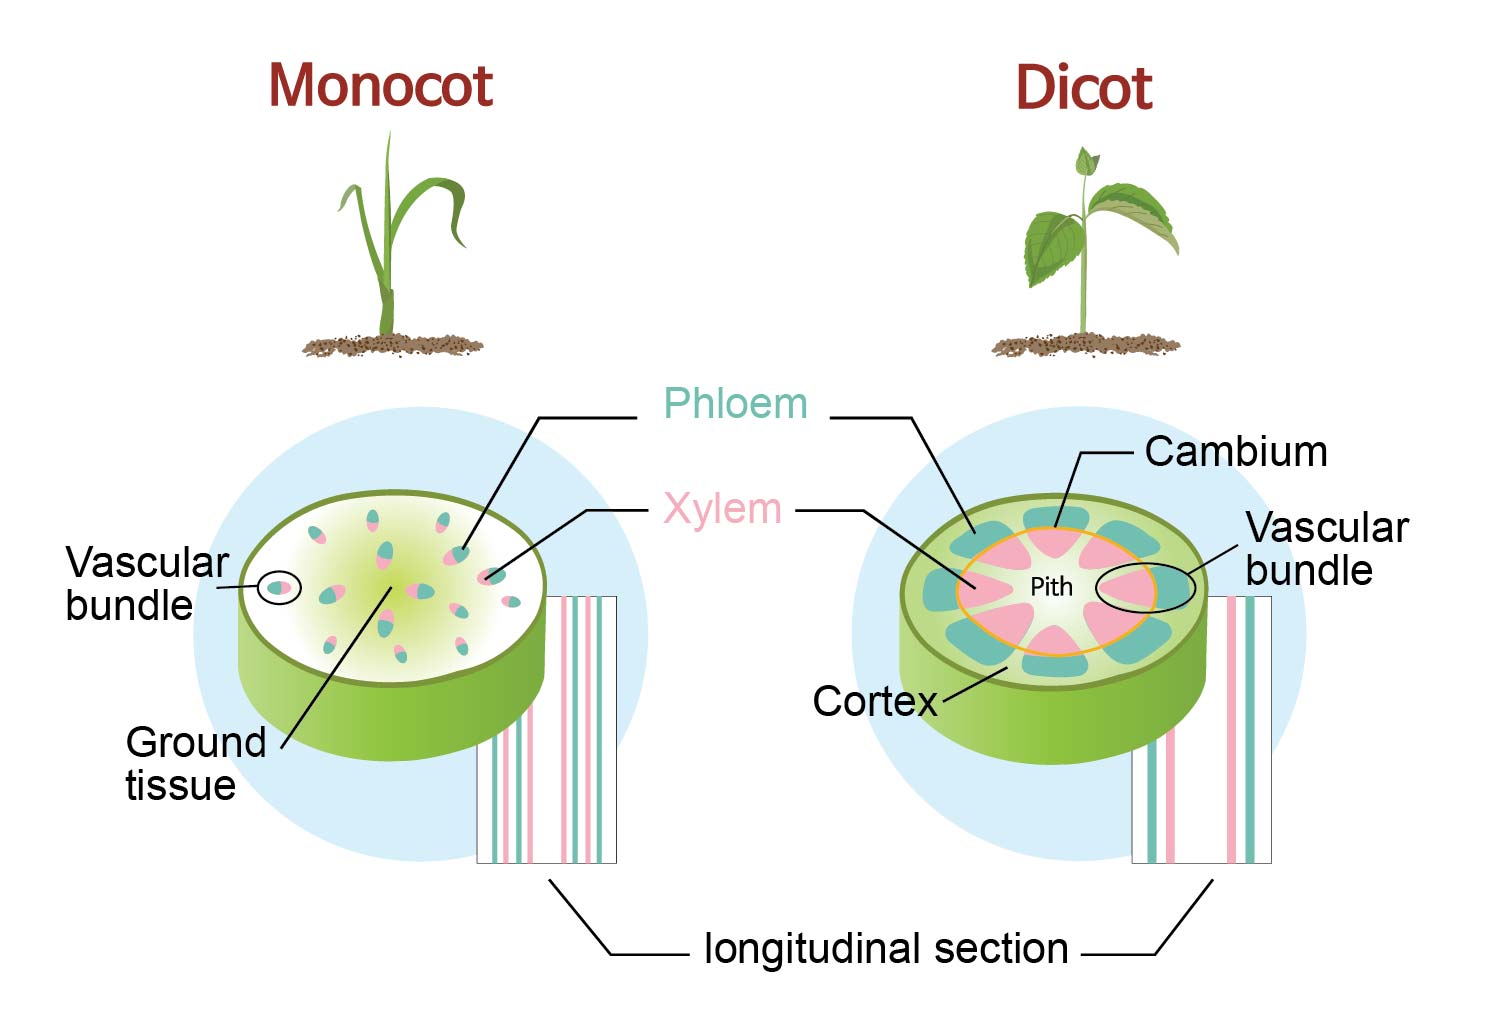 Monocot And Dicot Plants